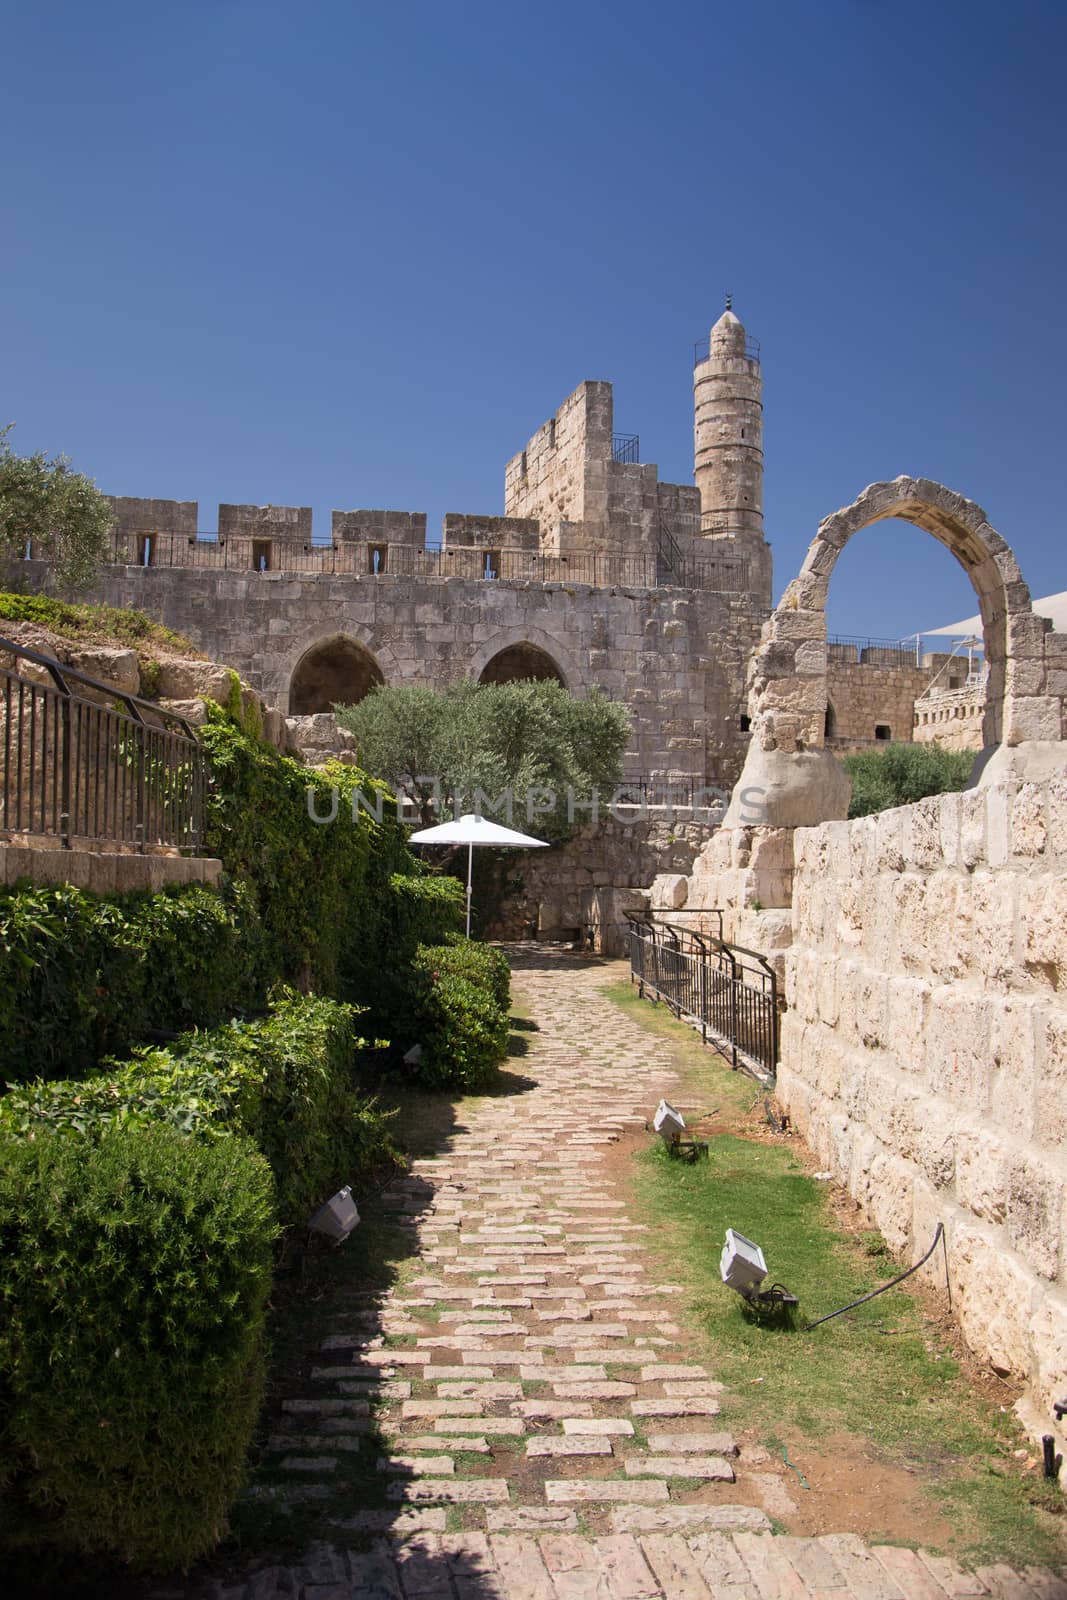 Tower Of David, in Jerusalem old city